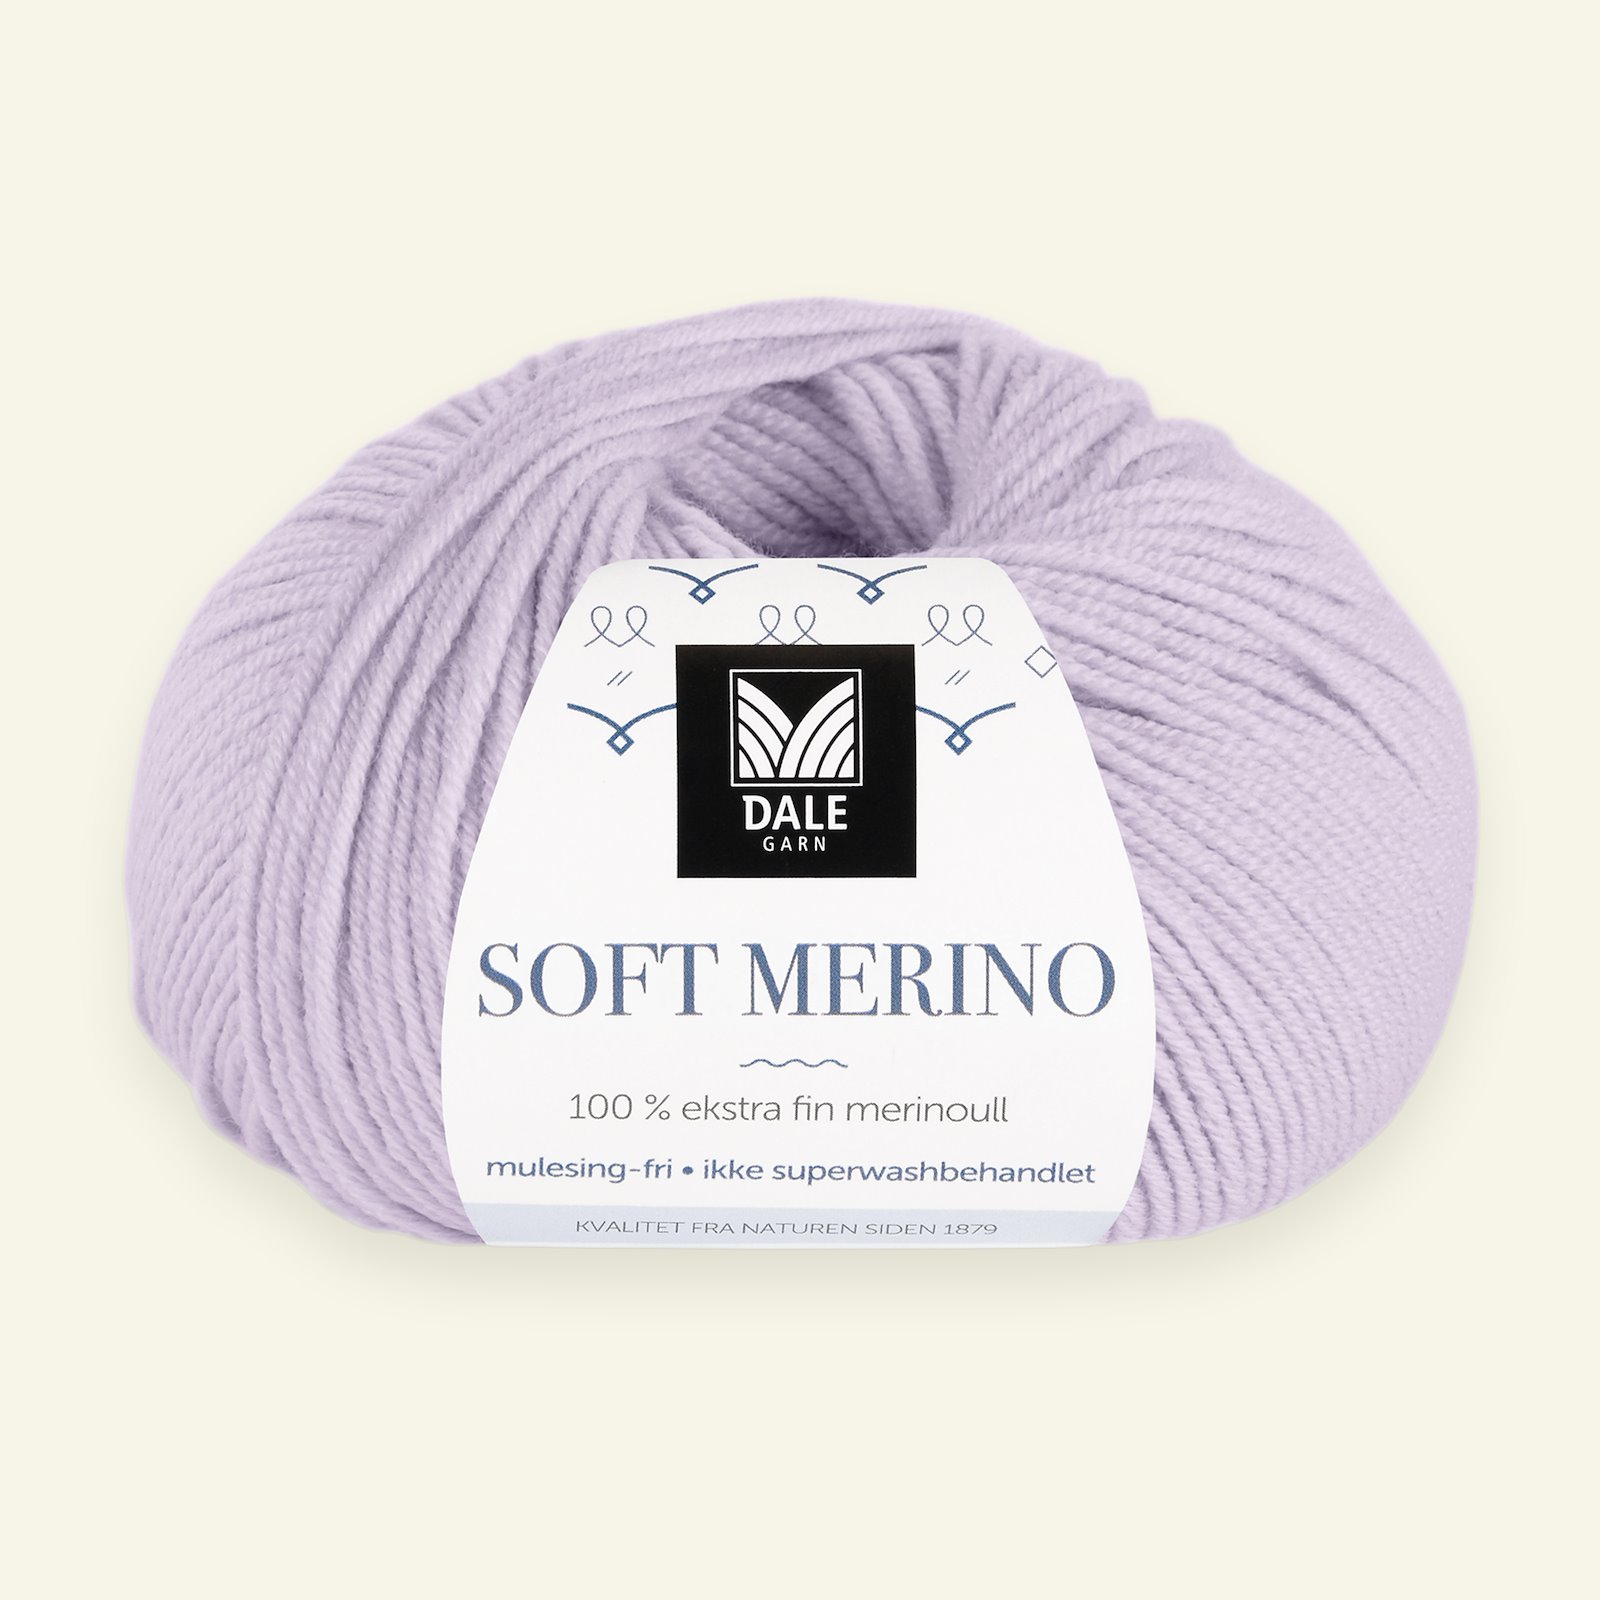 Dale Garn, 100% extra fine merino wool yarn, "Soft Merino", light lilac 90000360_pack